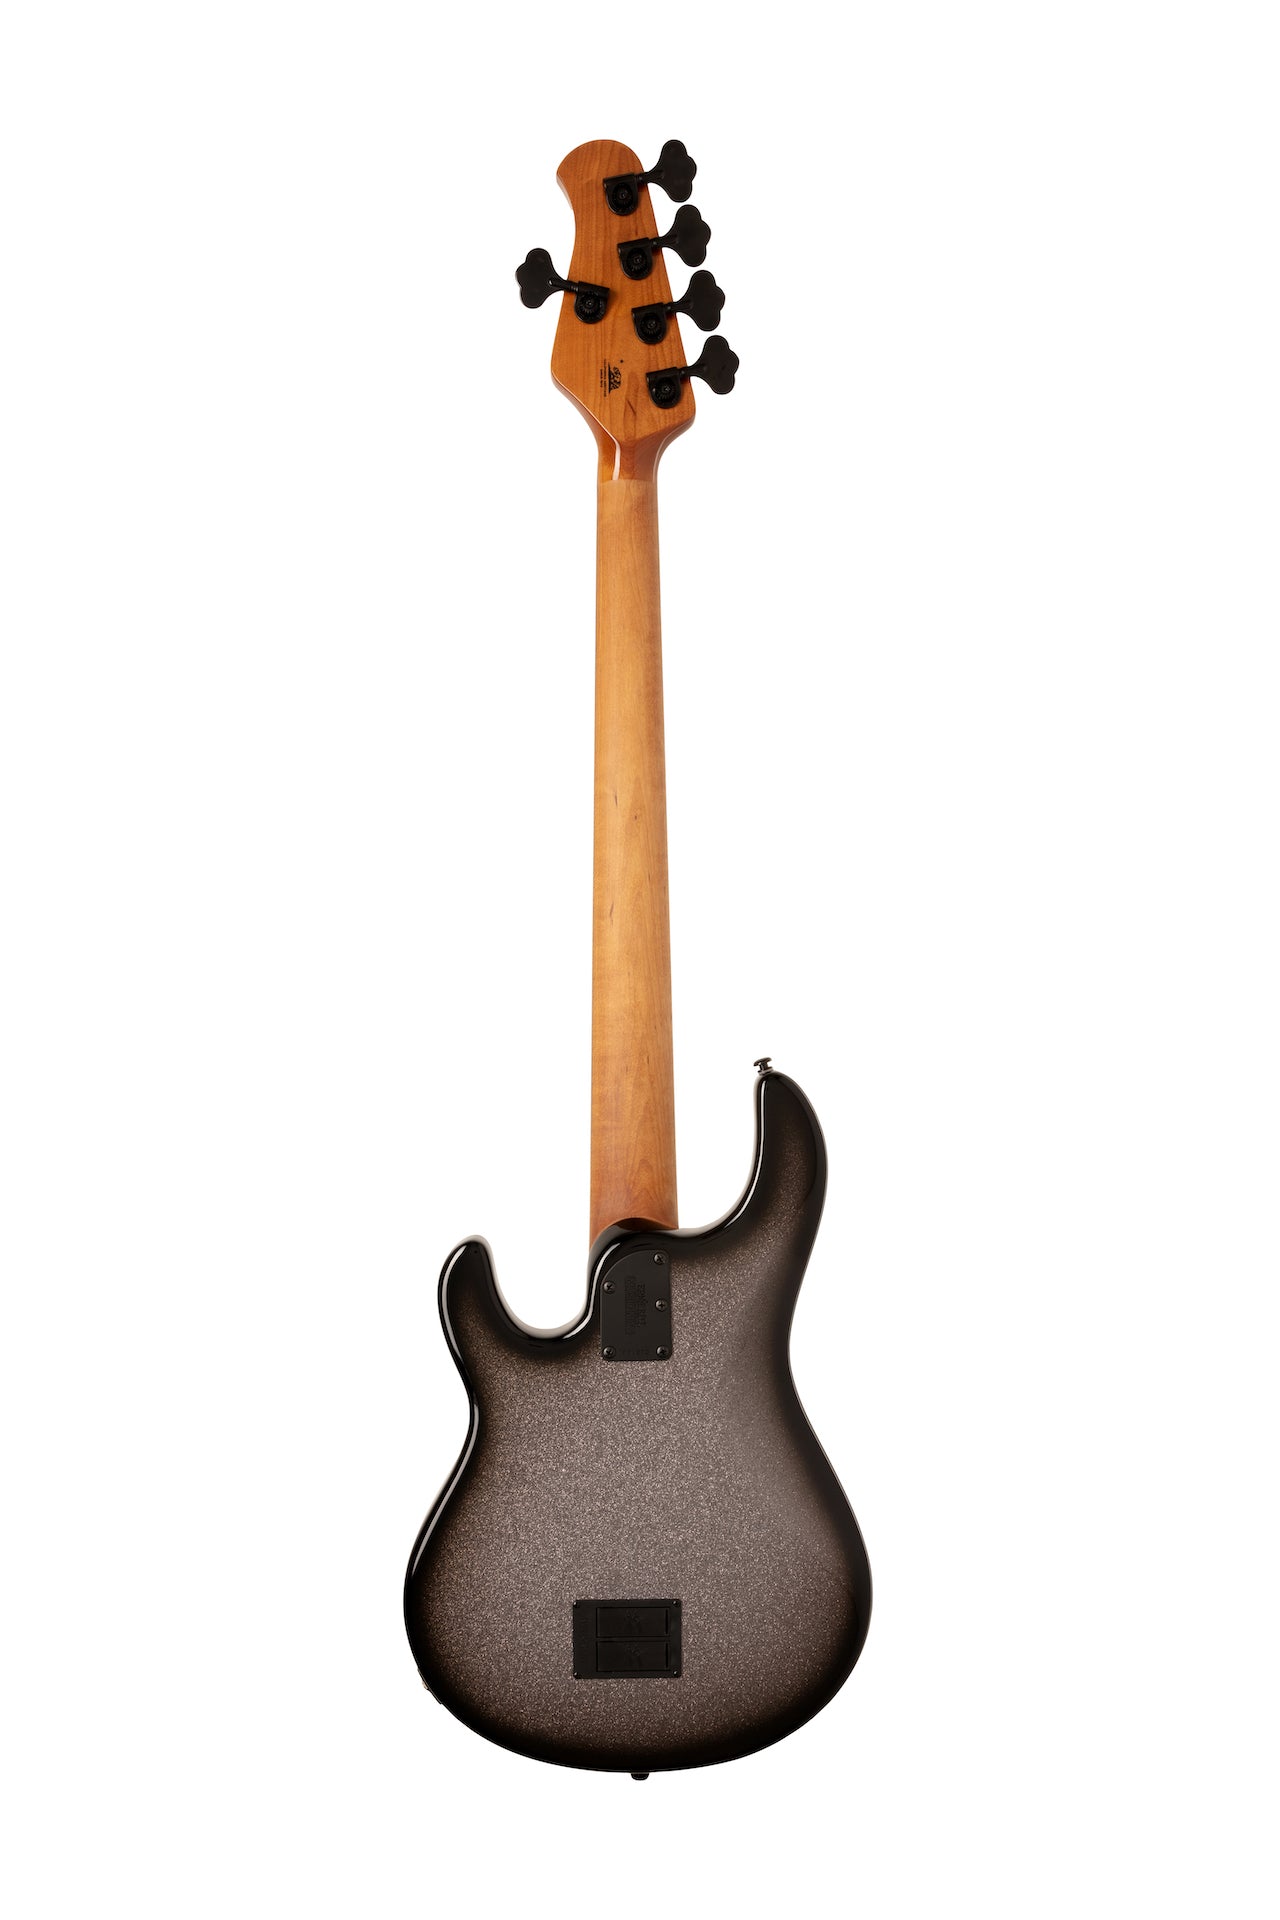 Ernie Ball Music Man StingRay Special 5 HH Bass Guitar - Smoked Chrome with Ebony F96546 Fingerboard - HIENDGUITAR   Musicman bass